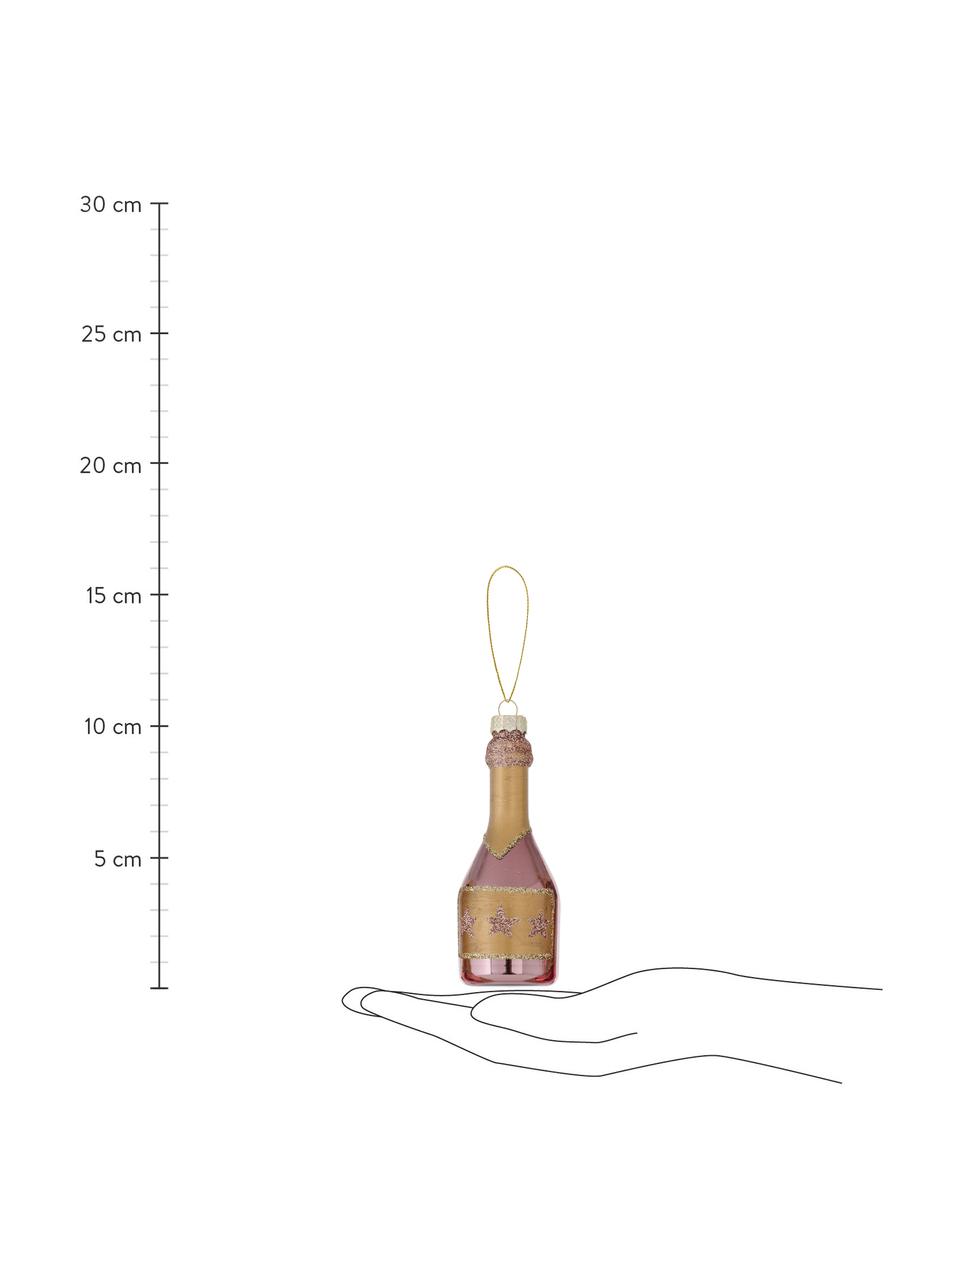 Kerstboomhangersset Champagne H 10 cm, 4 stuks, Rozetinten, goudkleurig, Ø 4 x H 10 cm